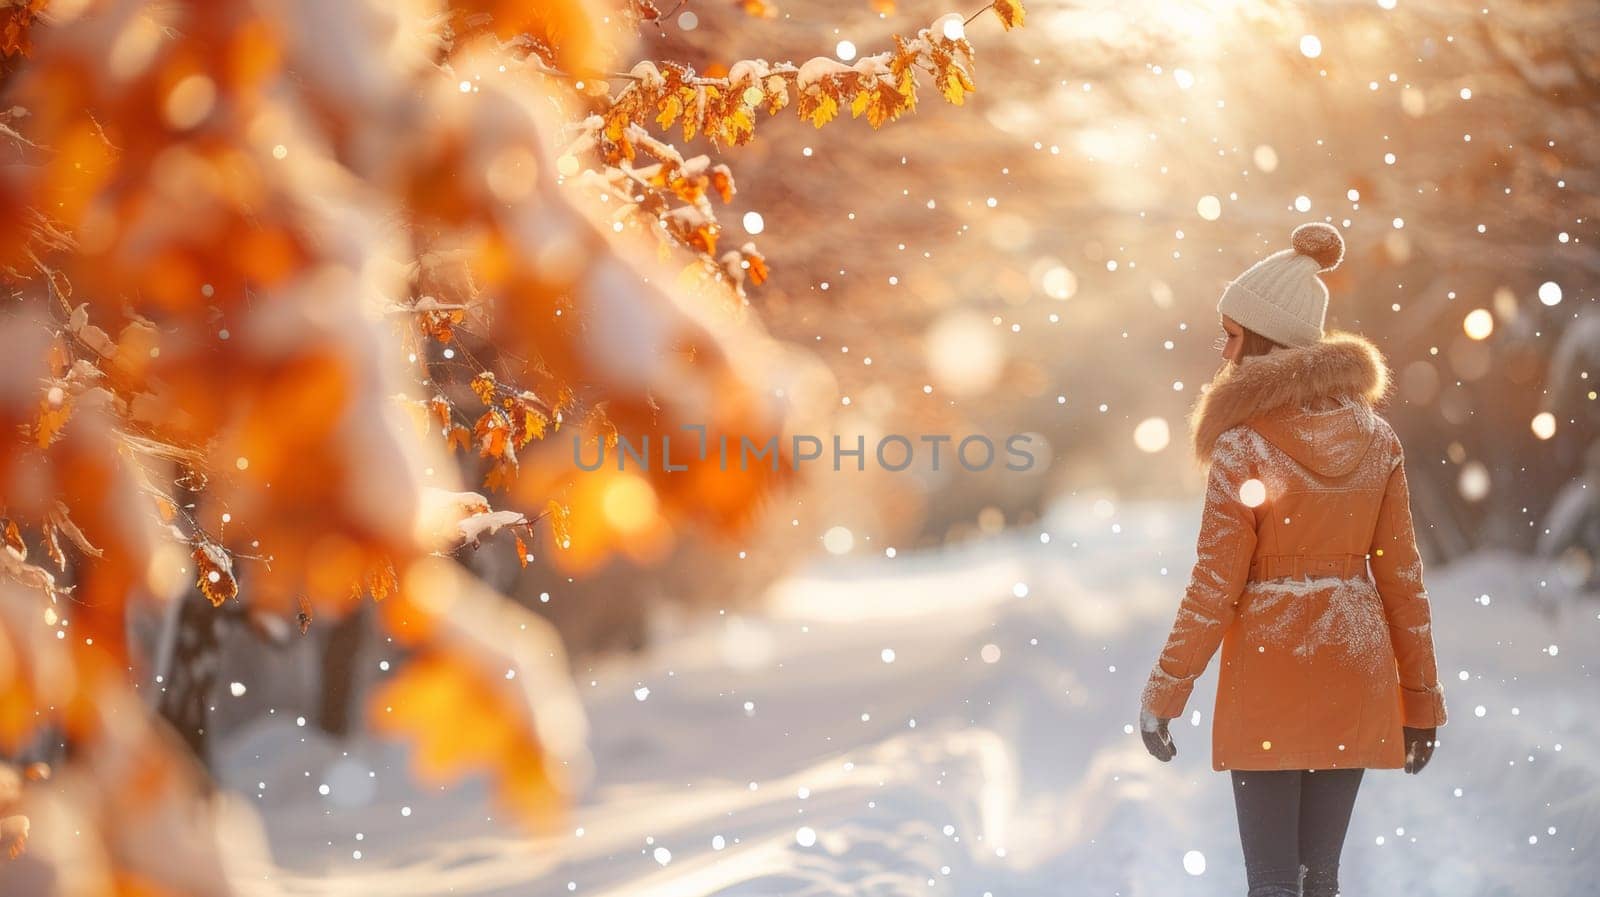 A woman walking down a snowy path in an orange coat, AI by starush